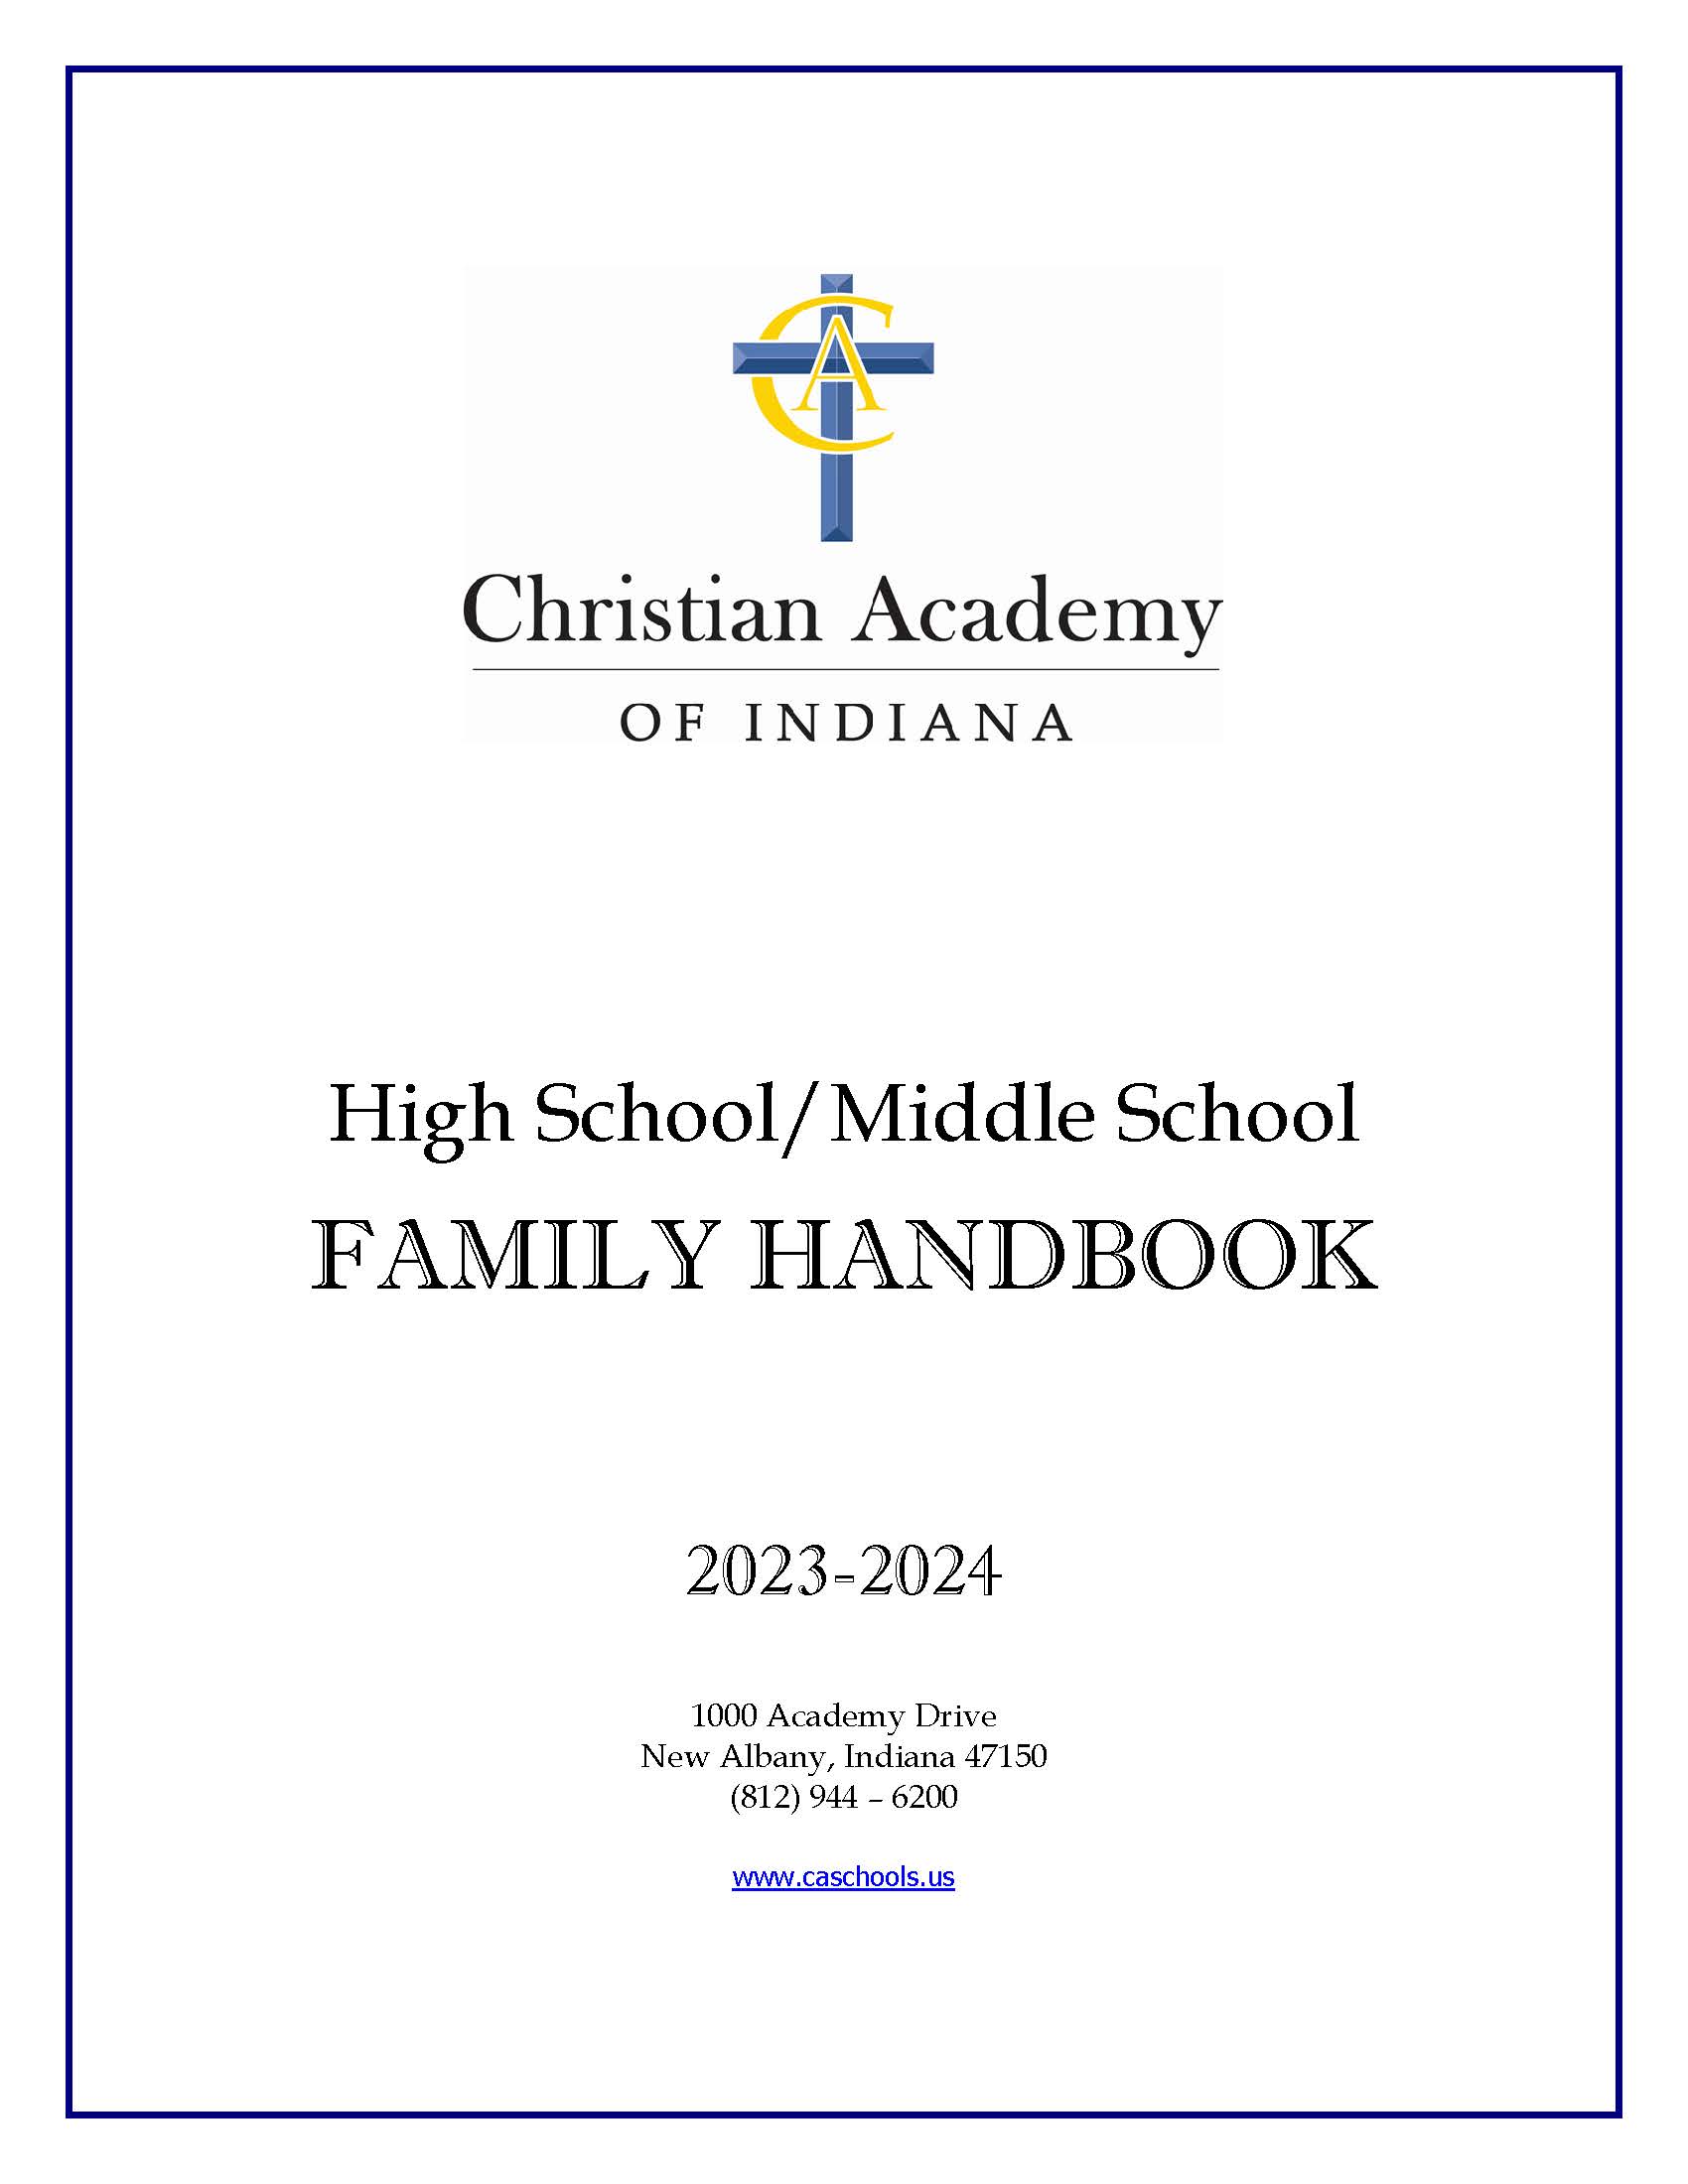 Christian Academy School System | Christian Academy of Indiana High School / Middle School | 2023-2024 Family Handbook